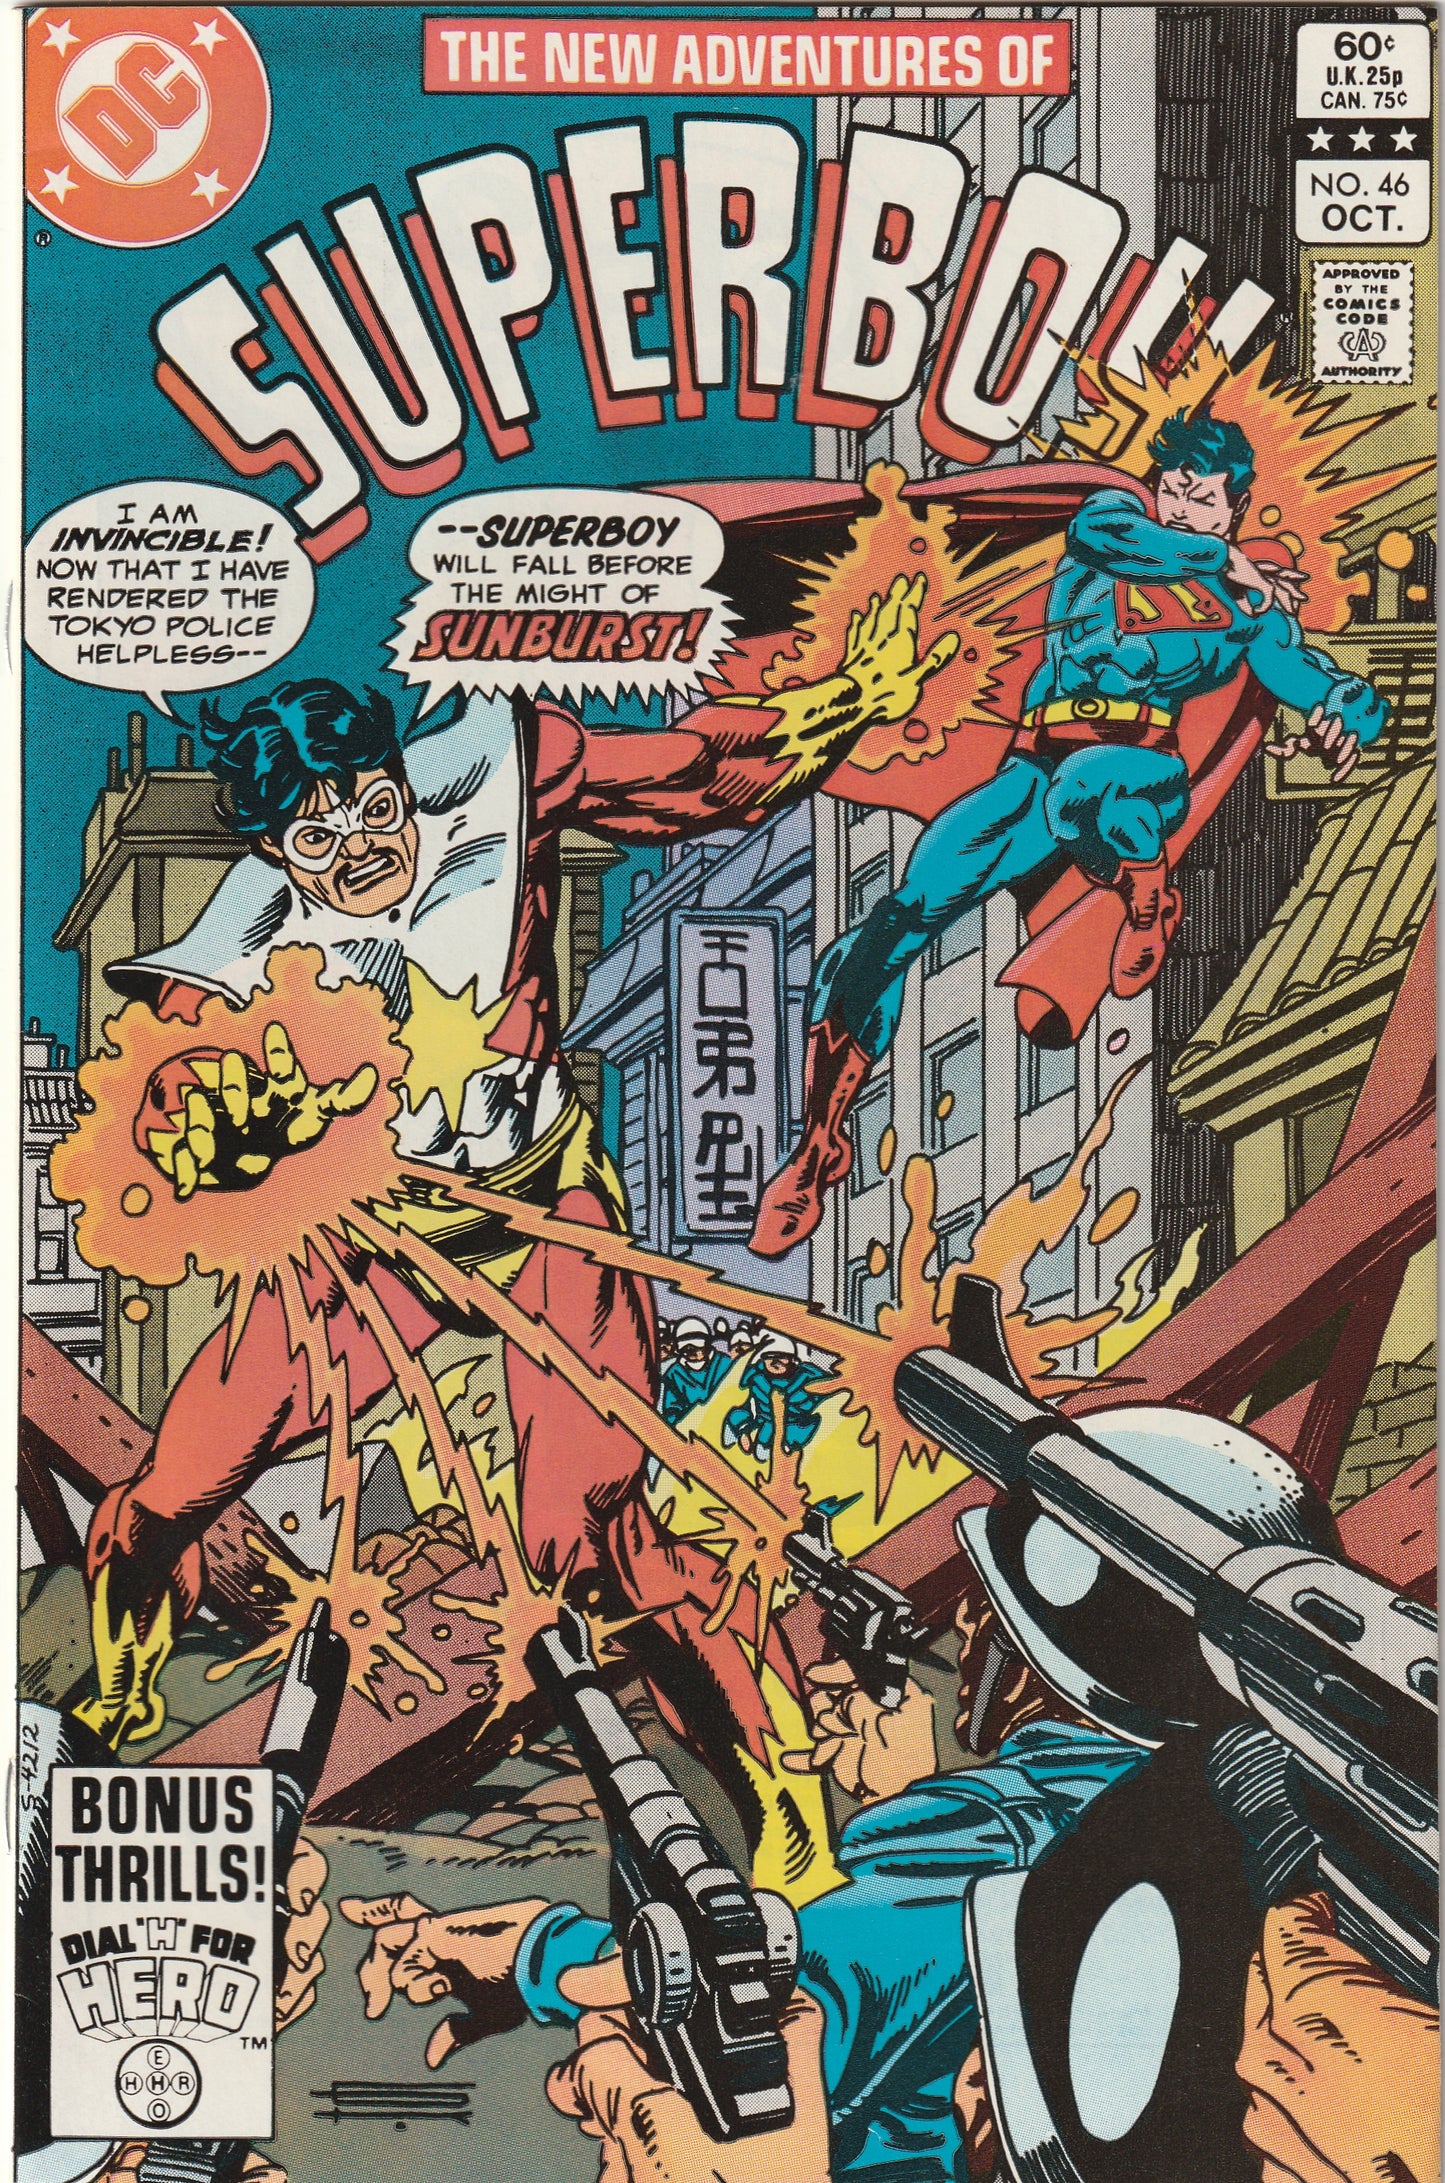 New Adventures of Superboy #46 (1983)